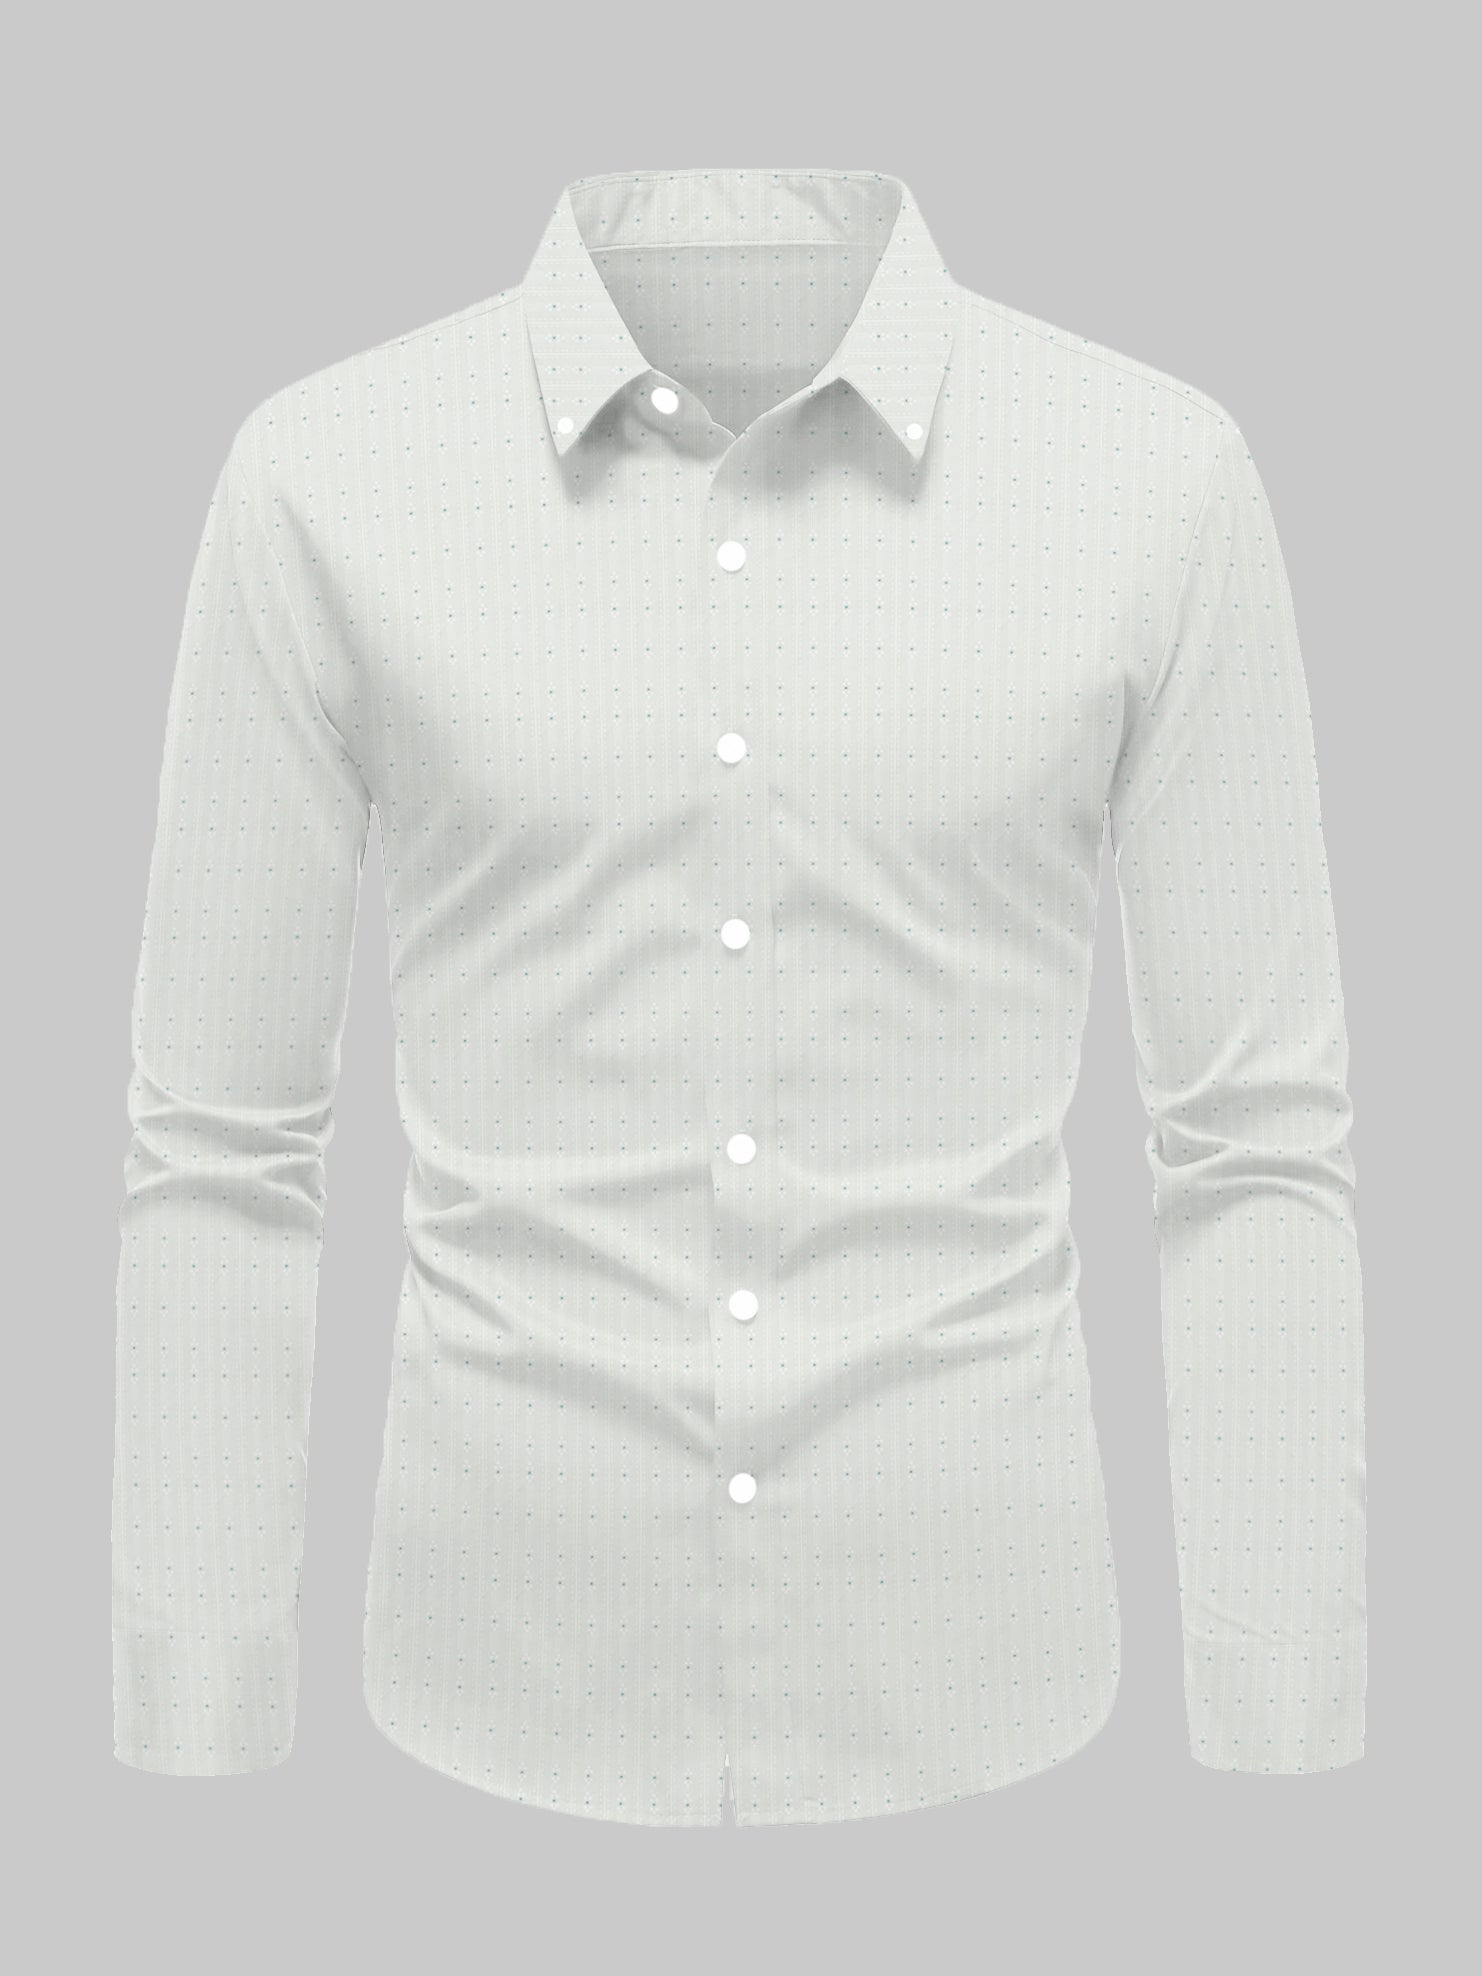 ZARA Premium Slim Fit Casual Shirt For Men-Grey with Allover Print-SP2490